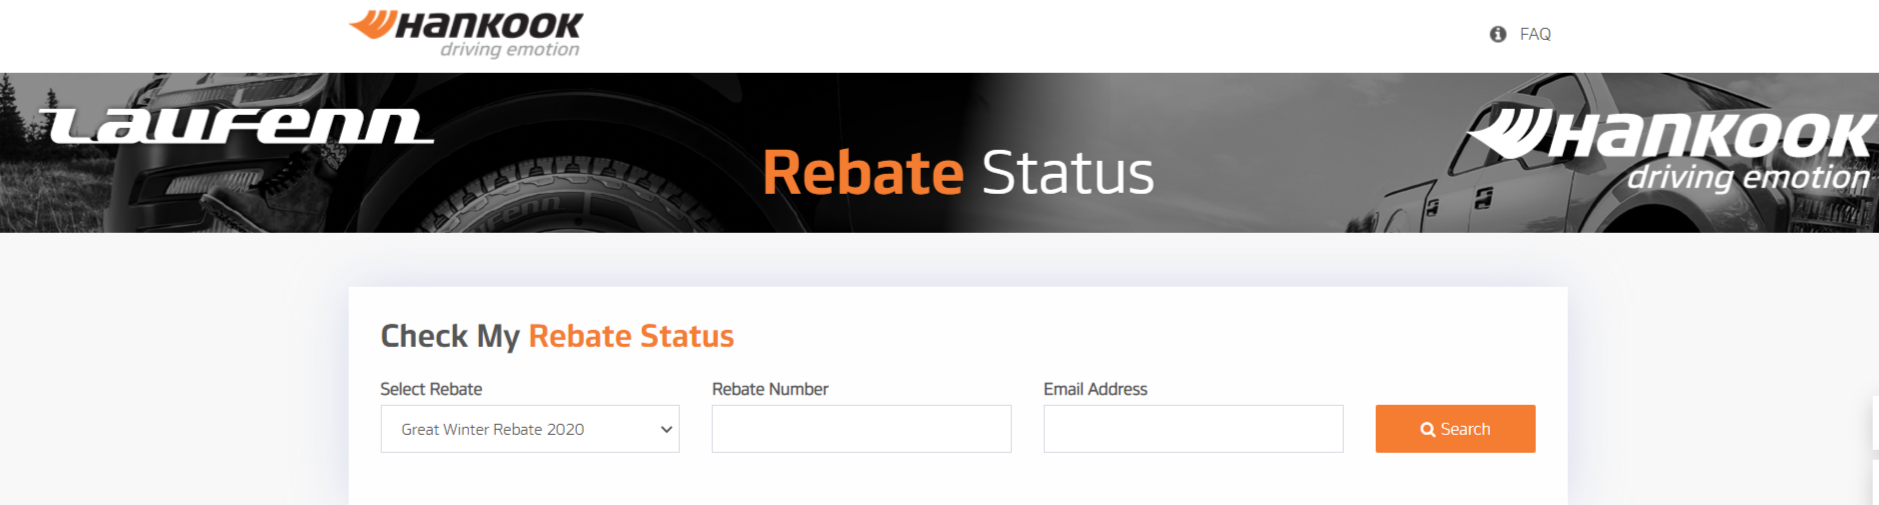 Hankook Rebate Check Statusonline Rebate Form